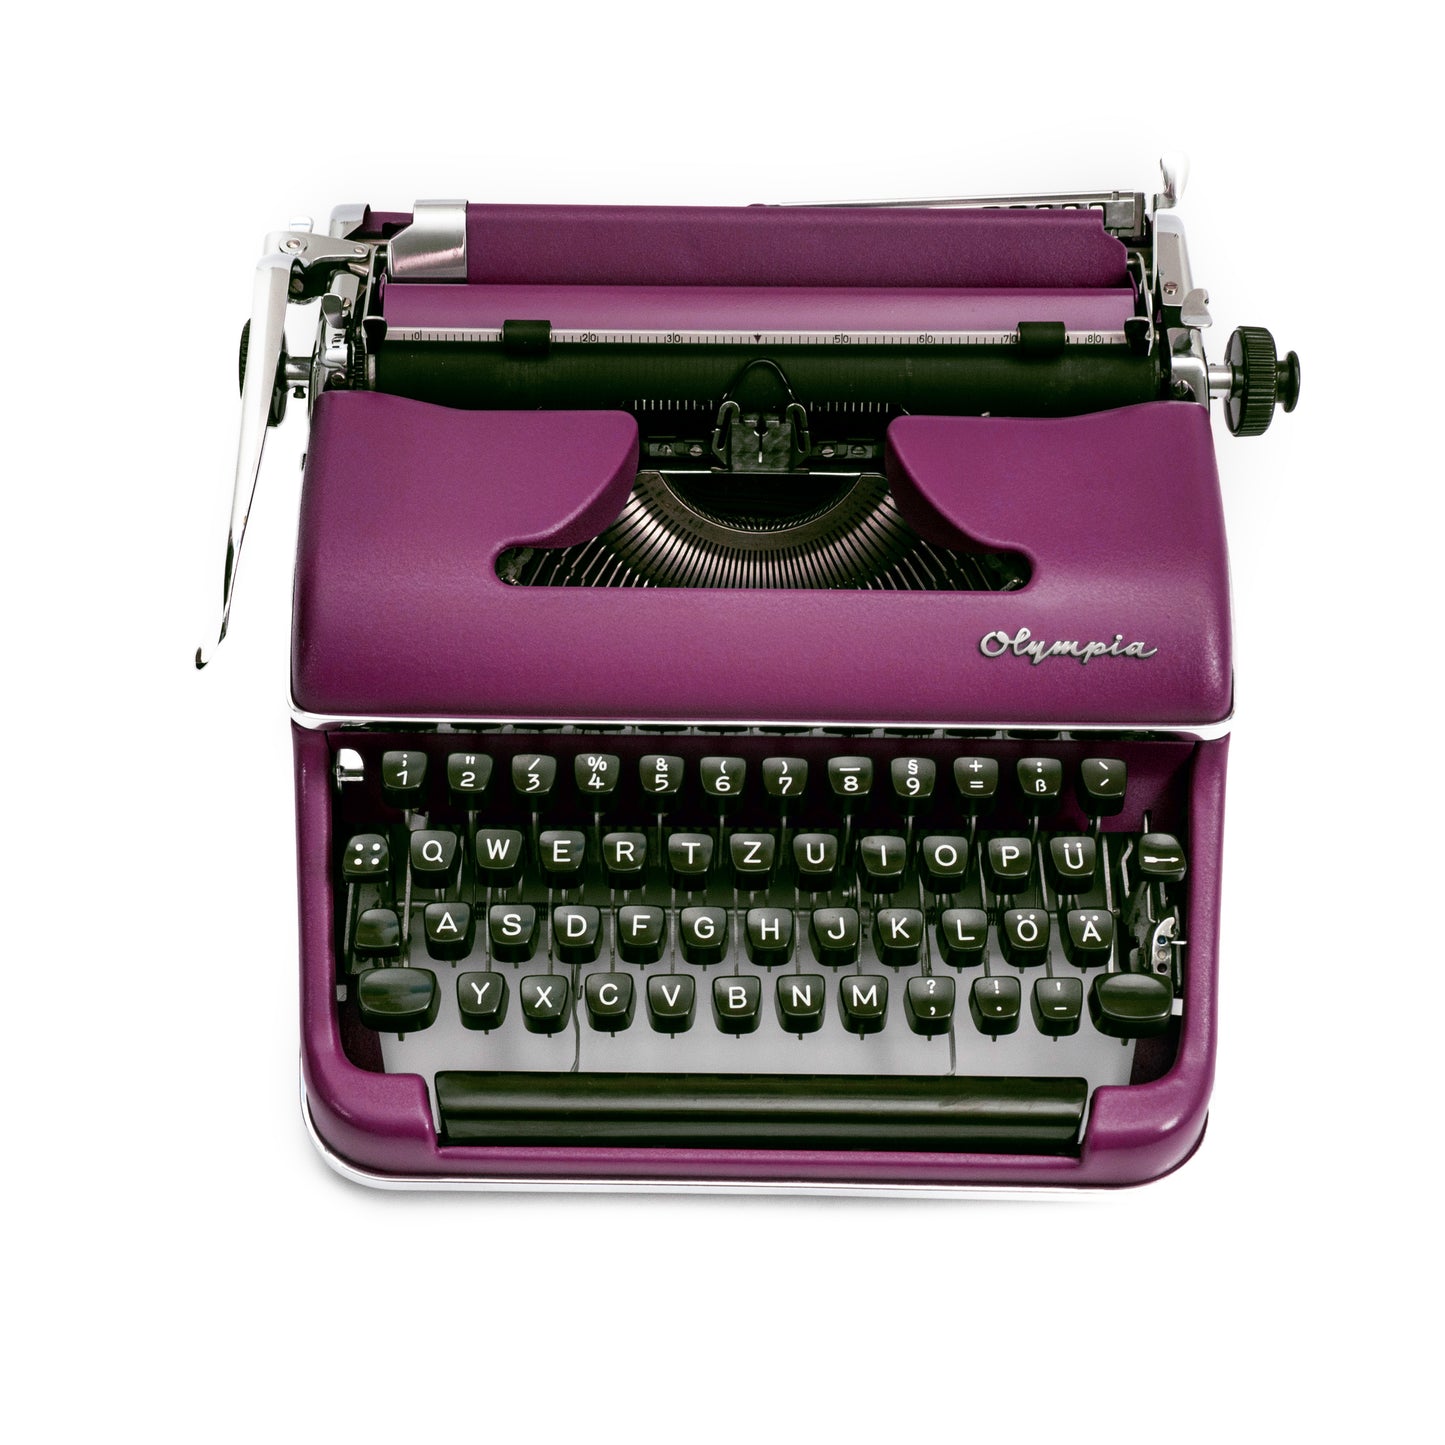 Retro Typewriter Olympia SM2, Dark Berry Purple